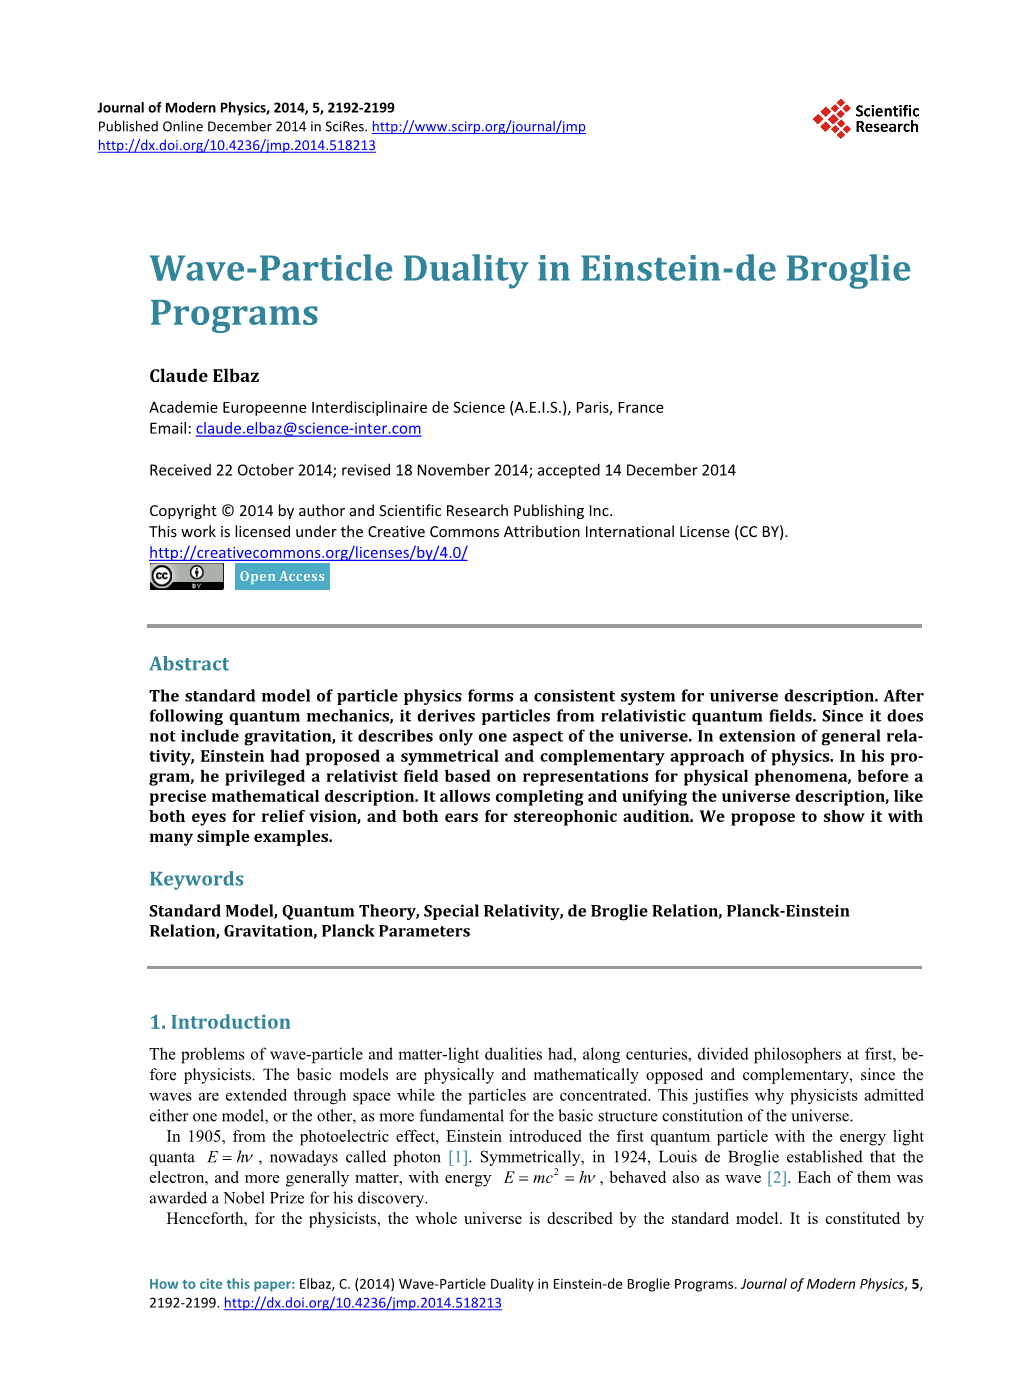 Wave-Particle Duality in Einstein-De Broglie Programs